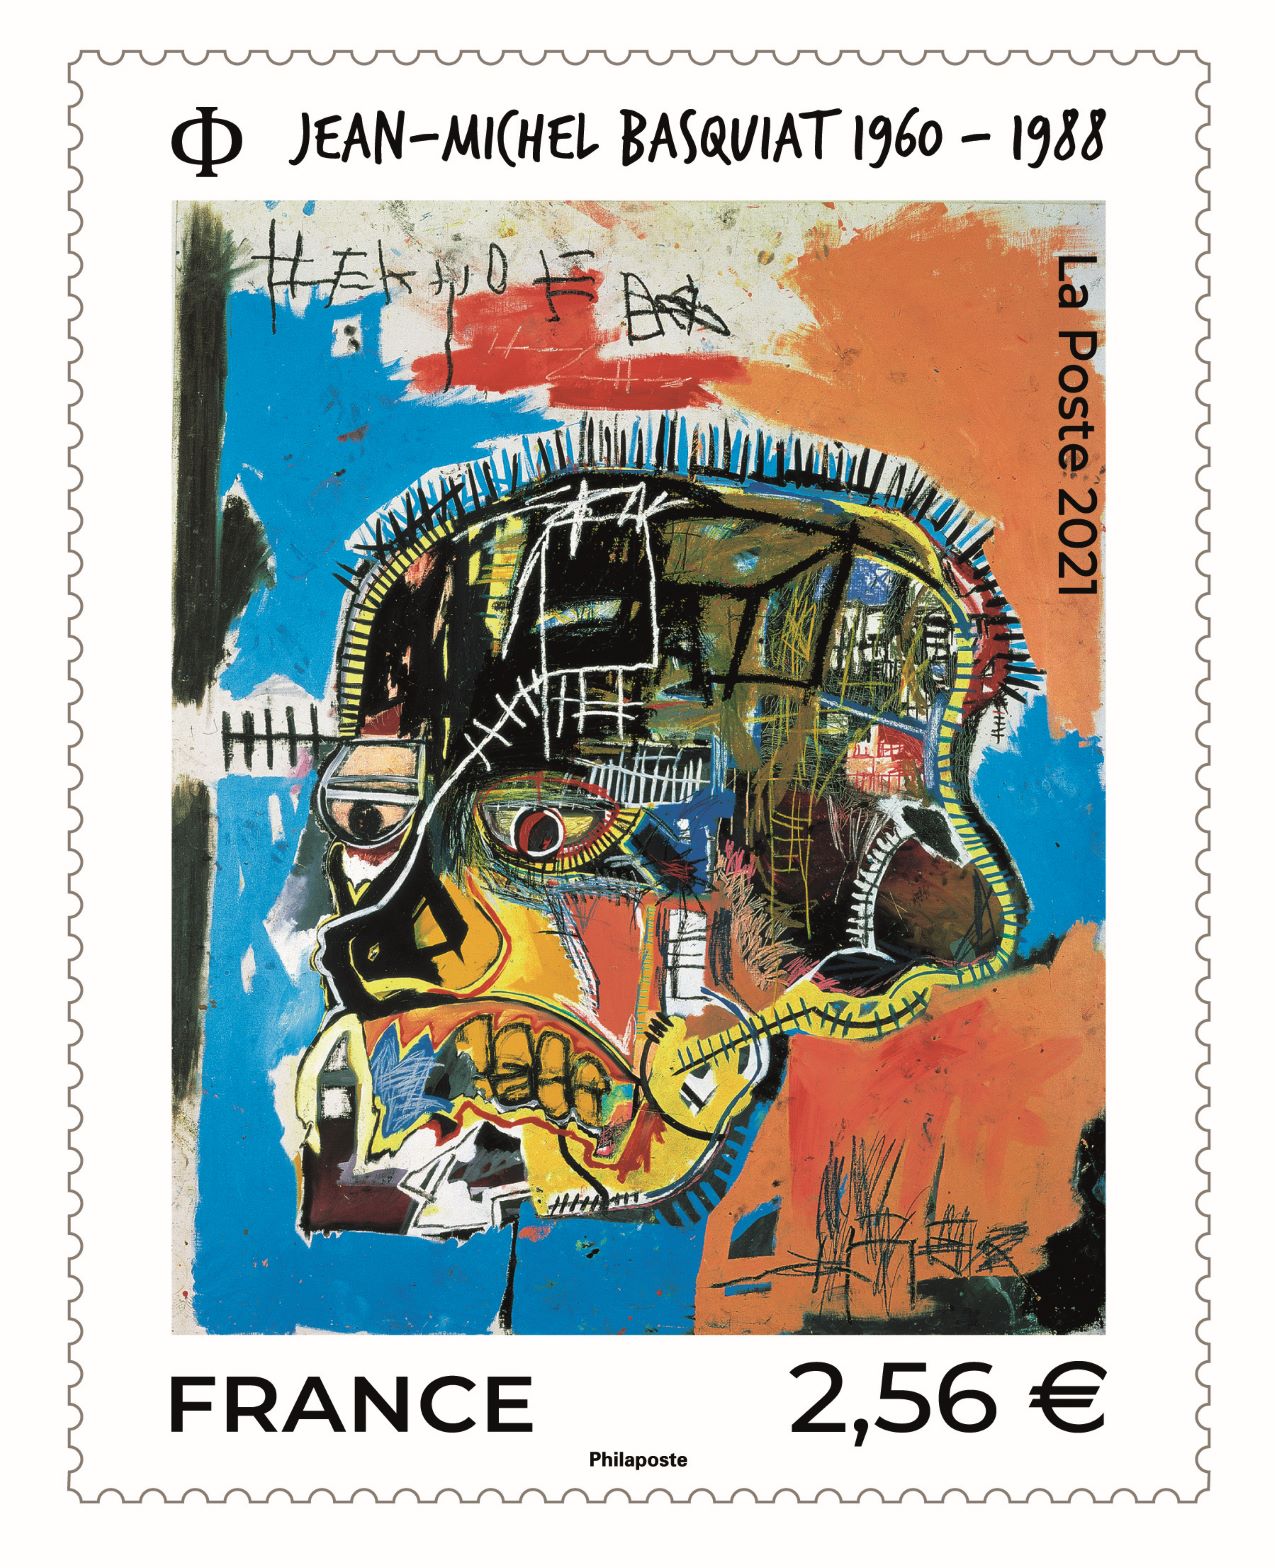 Emission Jean-Michel Basquiat (1960 - 1988)